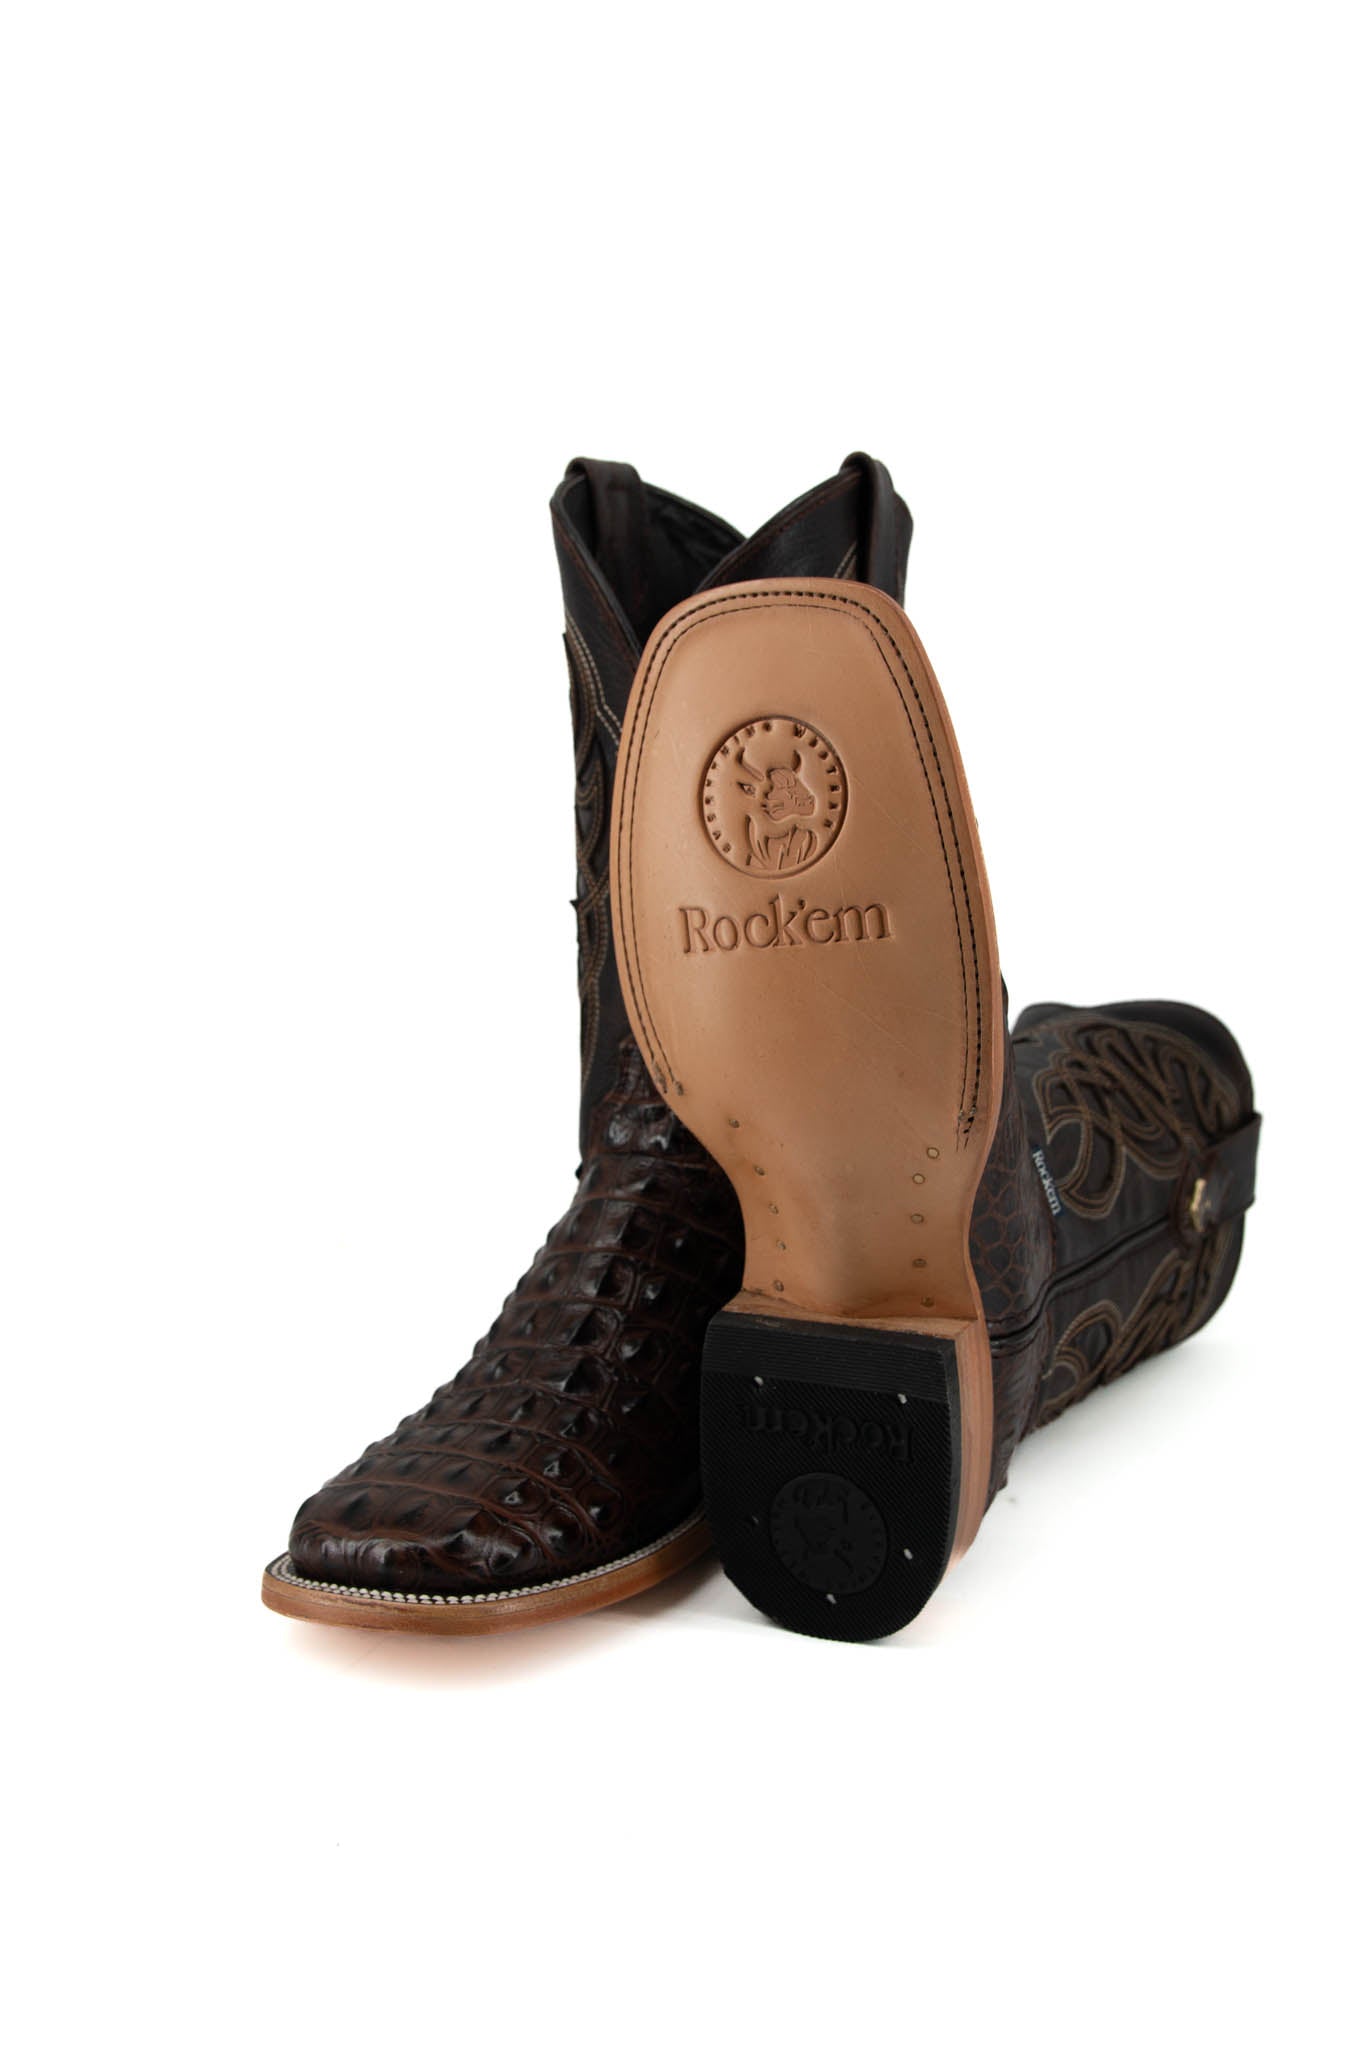 Lomo De Nilo Square Toe Cowboy Boot